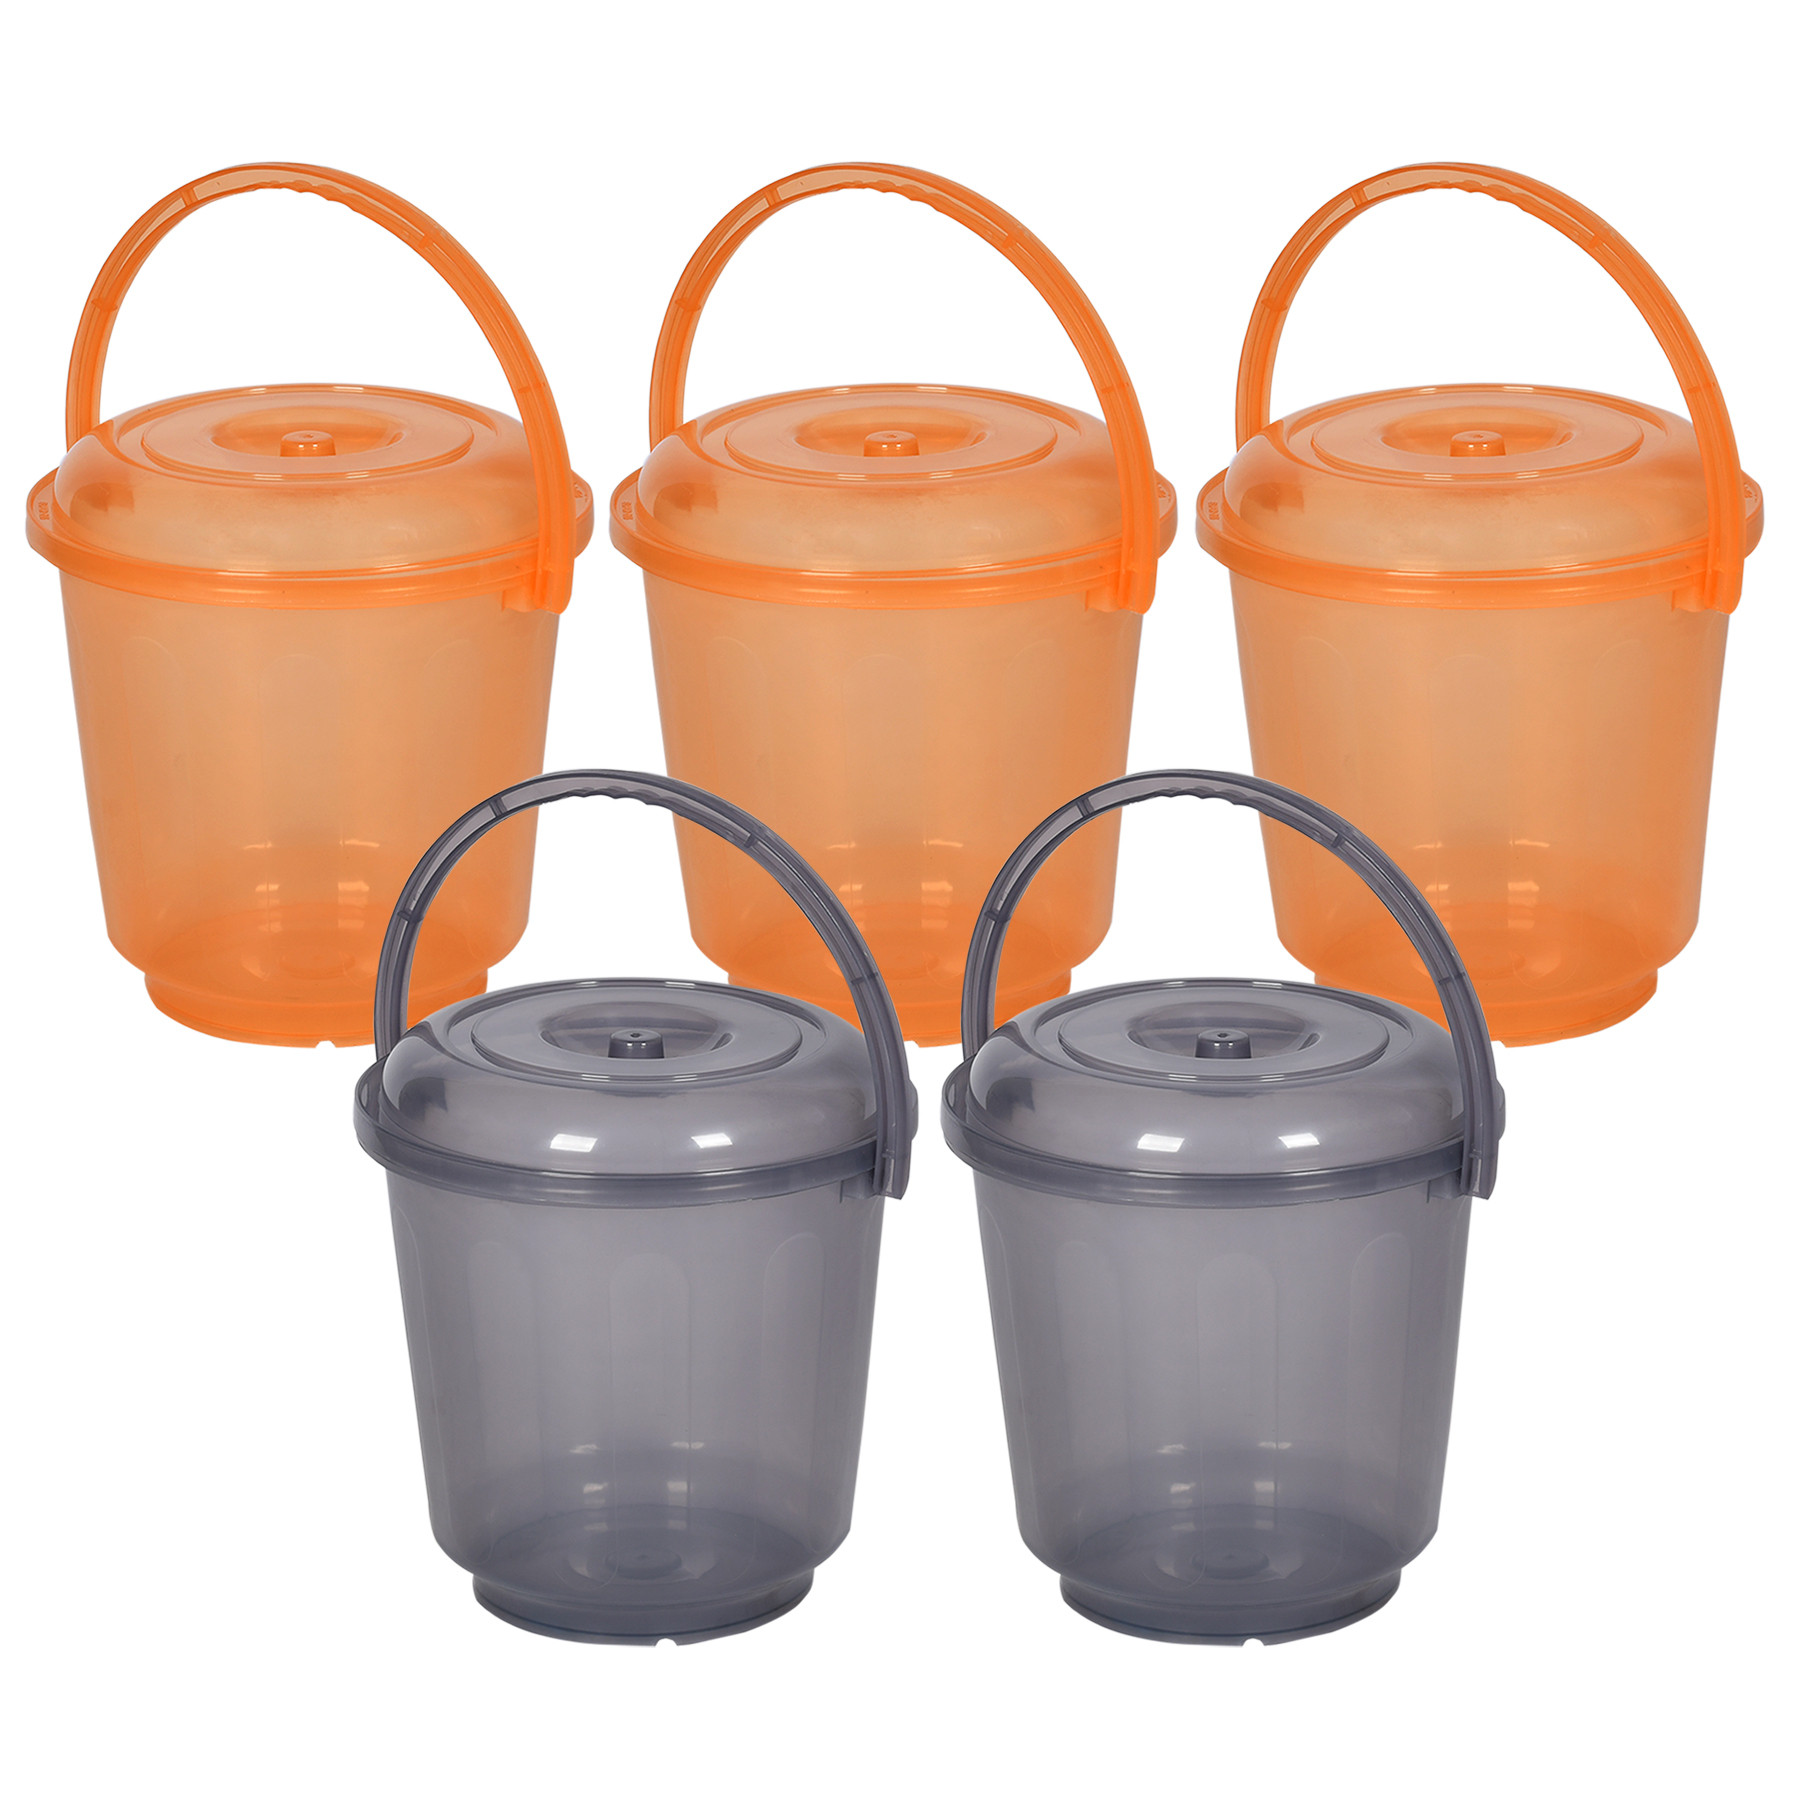 Kuber Industries Bucket | Bathroom Bucket | Utility Bucket for Daily Use | Water Storage Bucket | Bathing Bucket with Handle & Lid | 13 LTR | SUPER-013 | Transparent | Gray & Orange